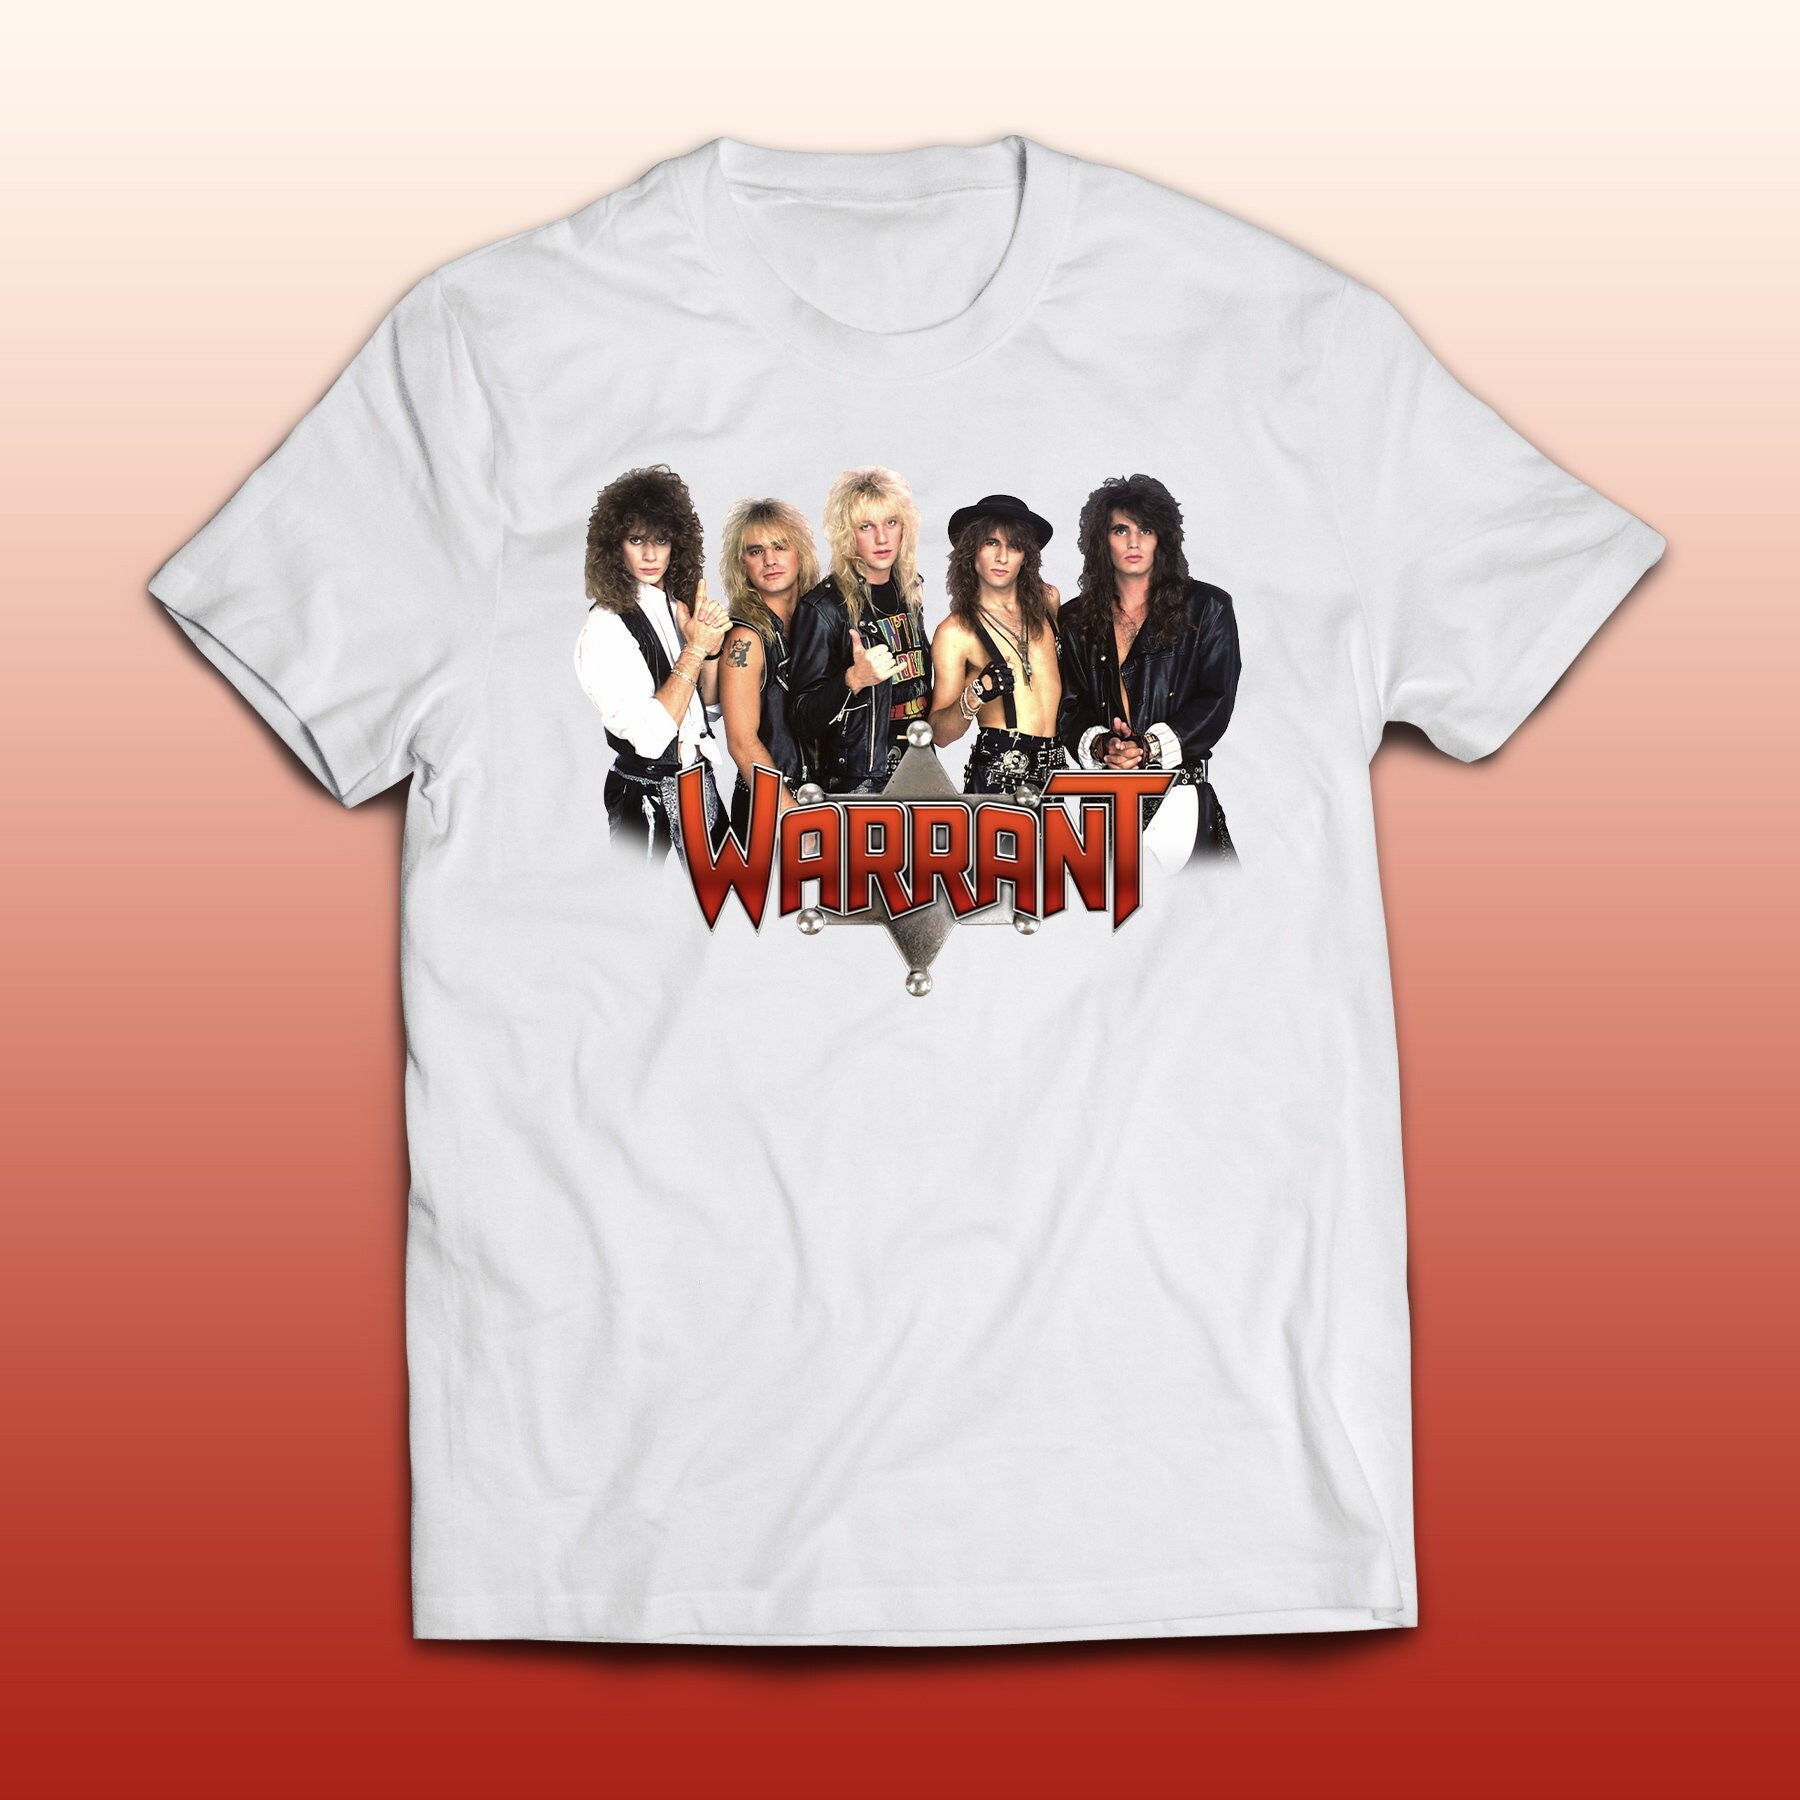 100% Cotton Black or White Warrant Shirt 80s Music Band Shirt Glam Metal Hard Rock| Vintage Retro Sizes S to 3XL